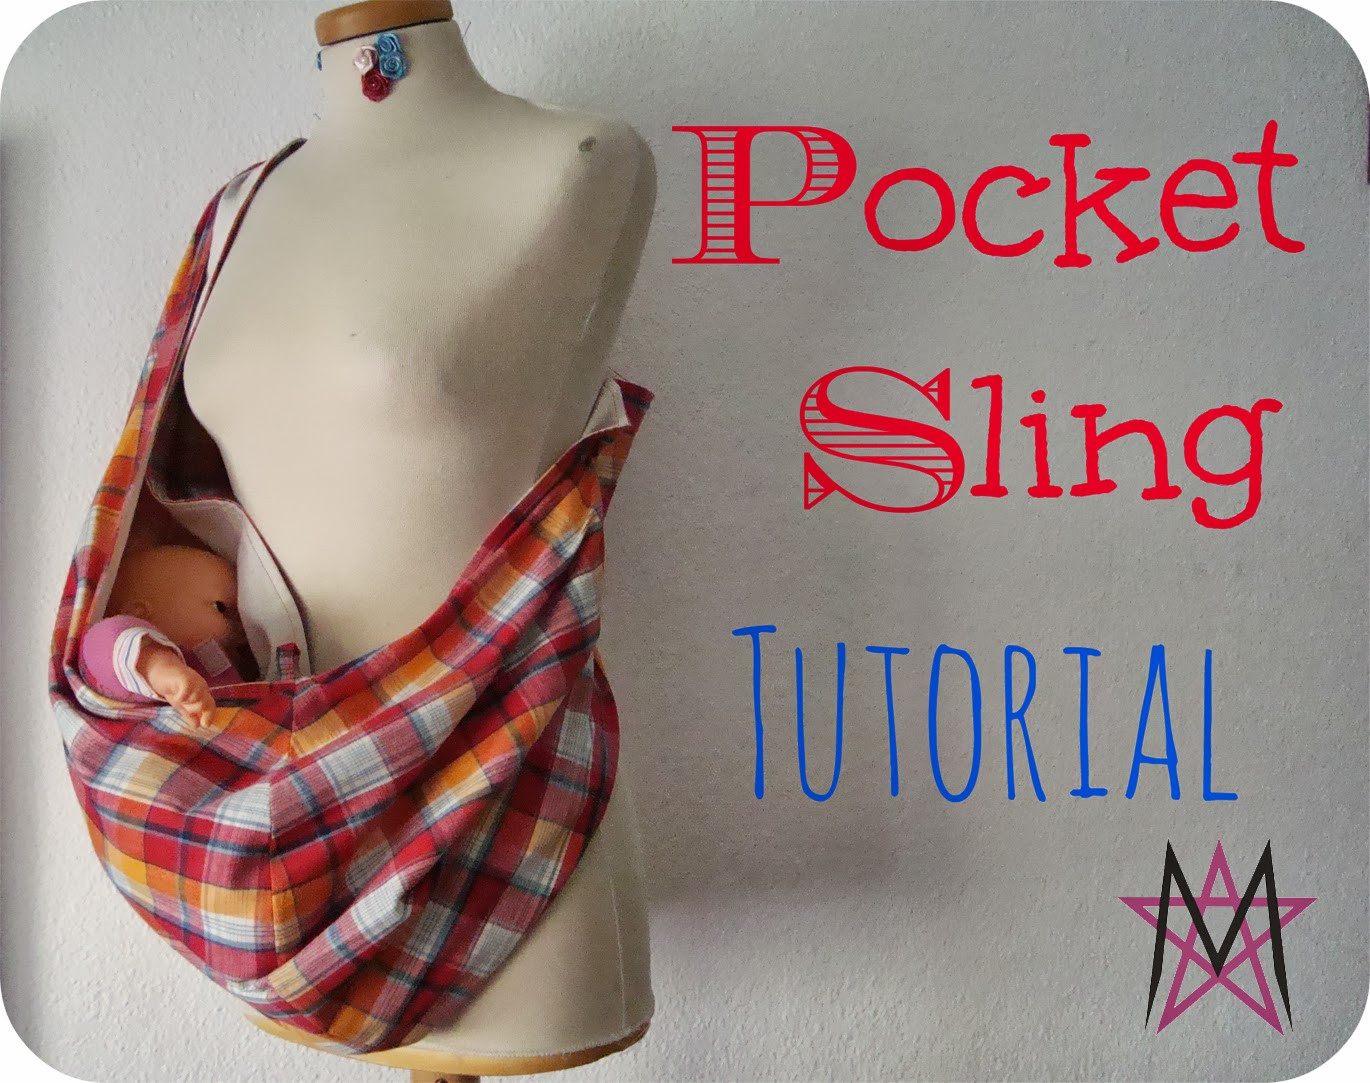 DIY Baby Wrap Sling
 House of Estrela Pocket Sling Tutorial